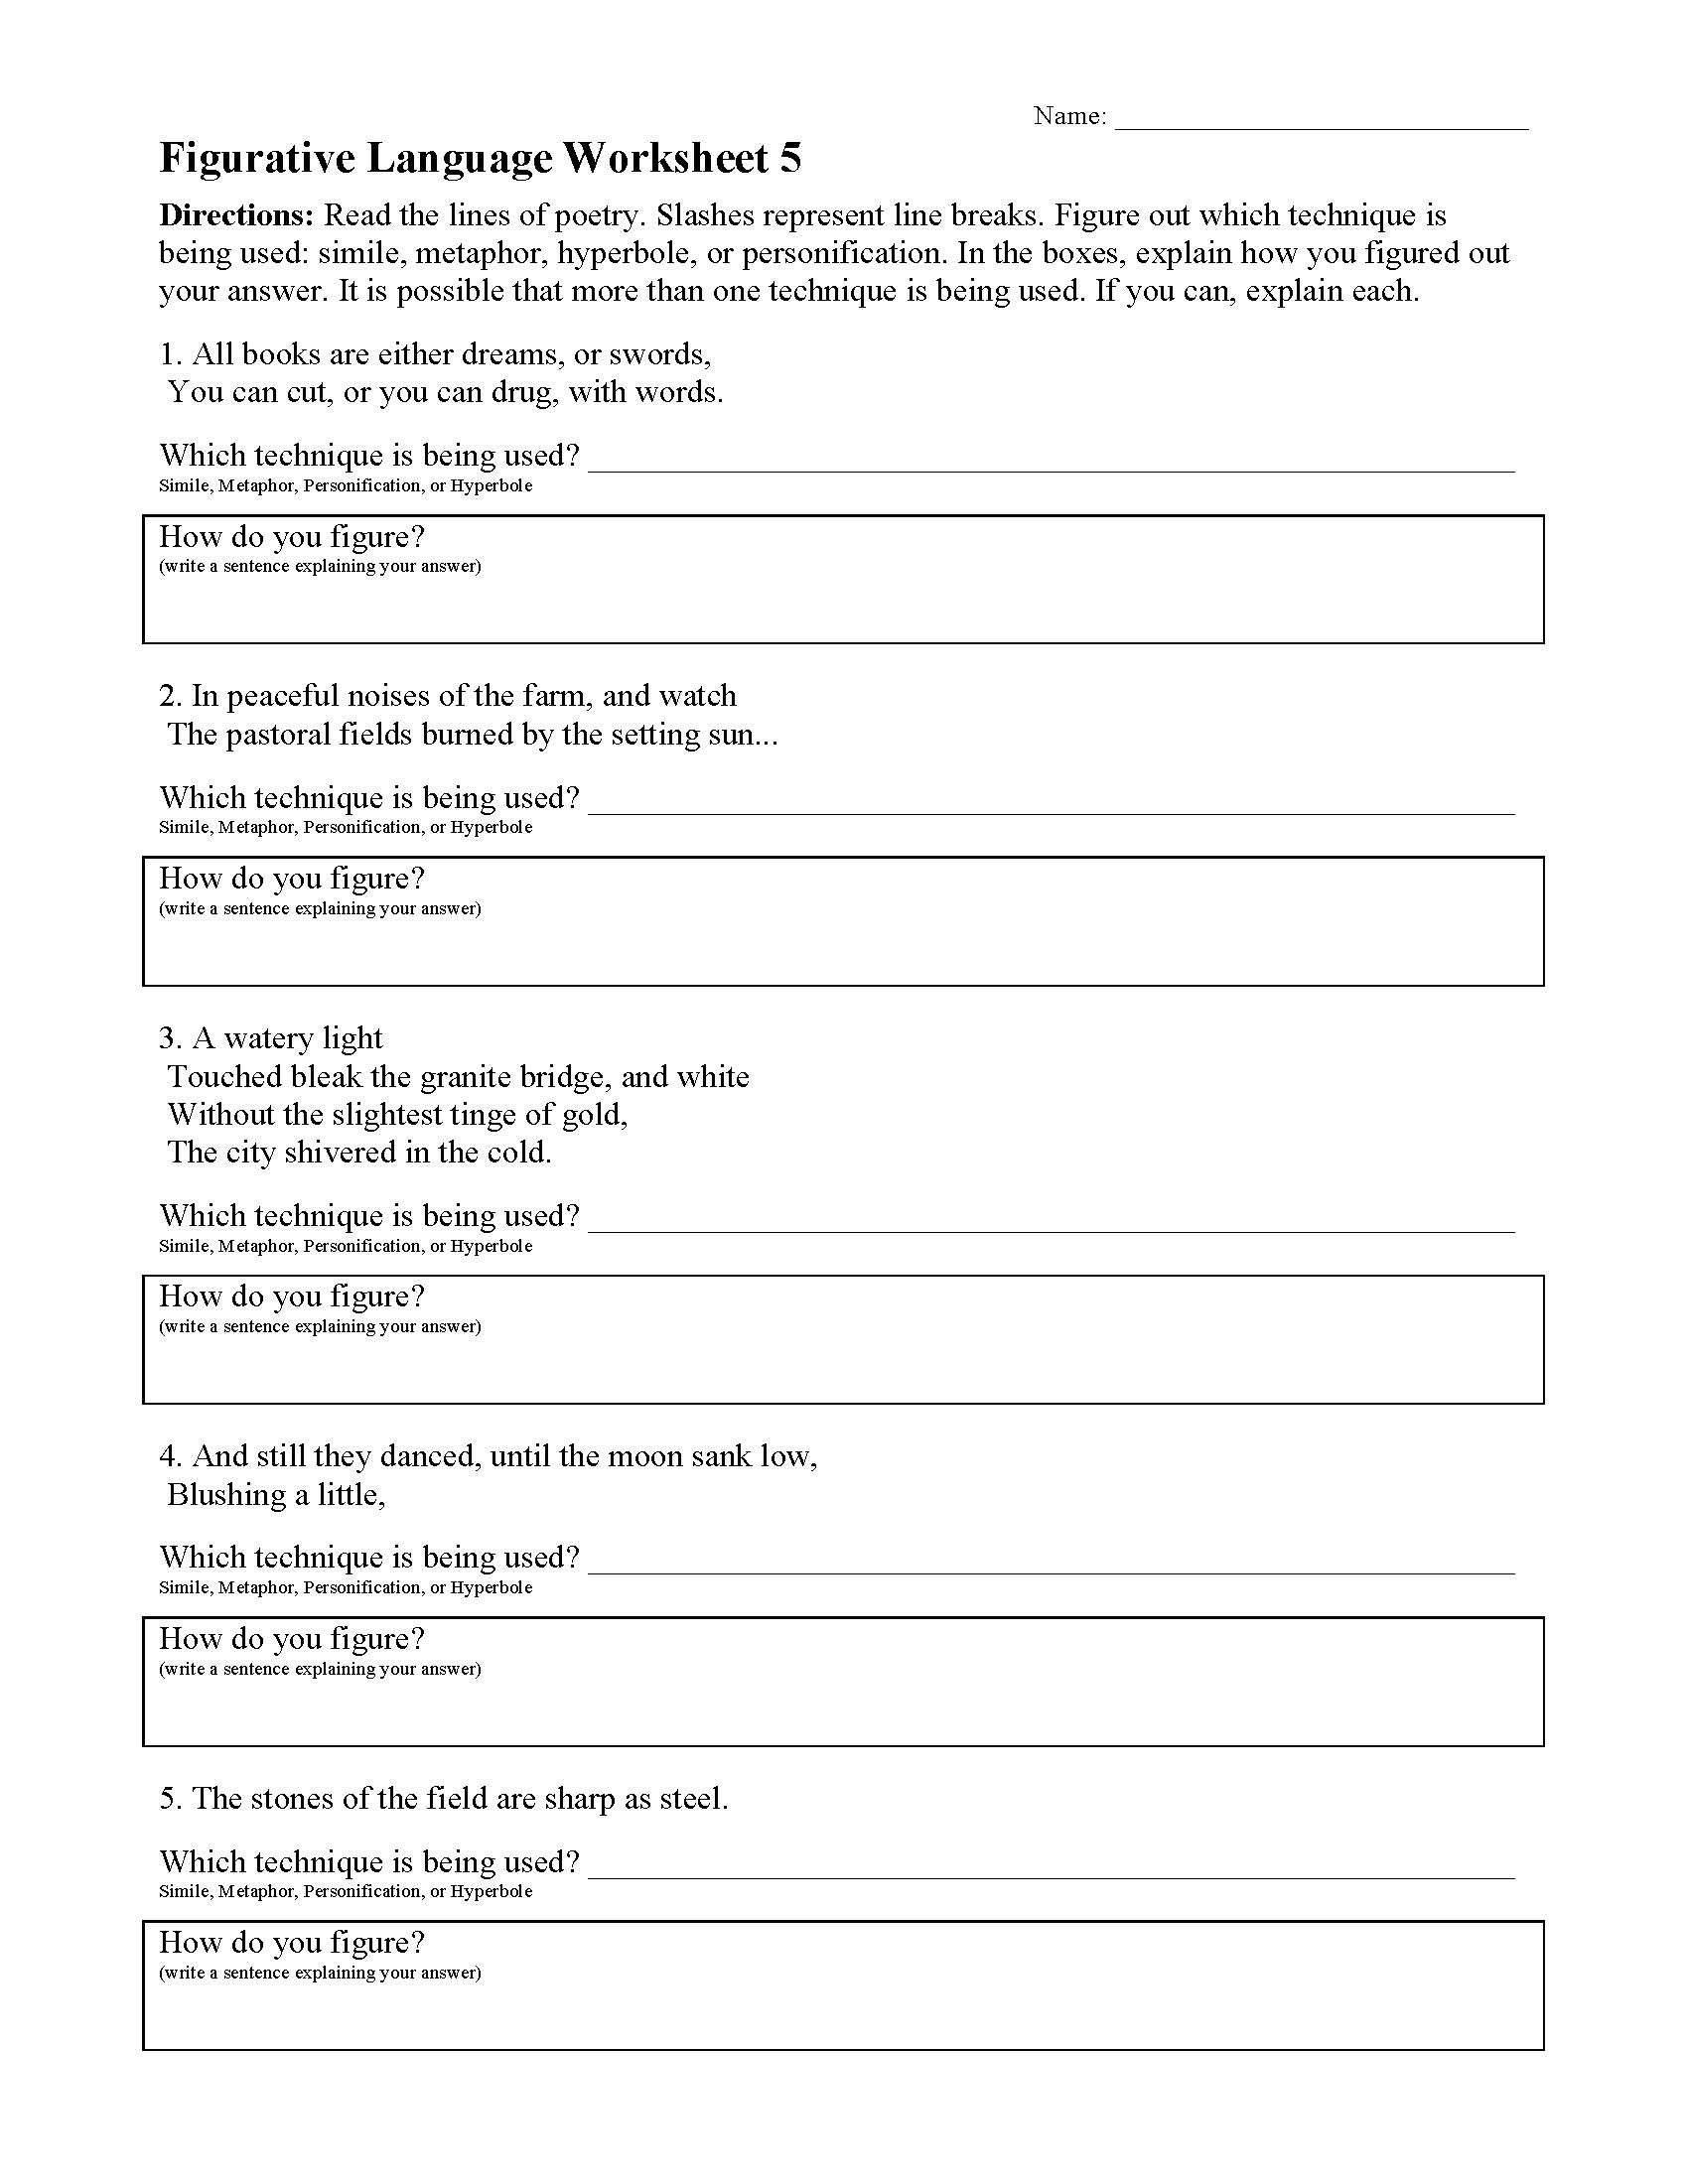 Figurative Language Worksheet 2 Answer Key My PDF Collection 2021